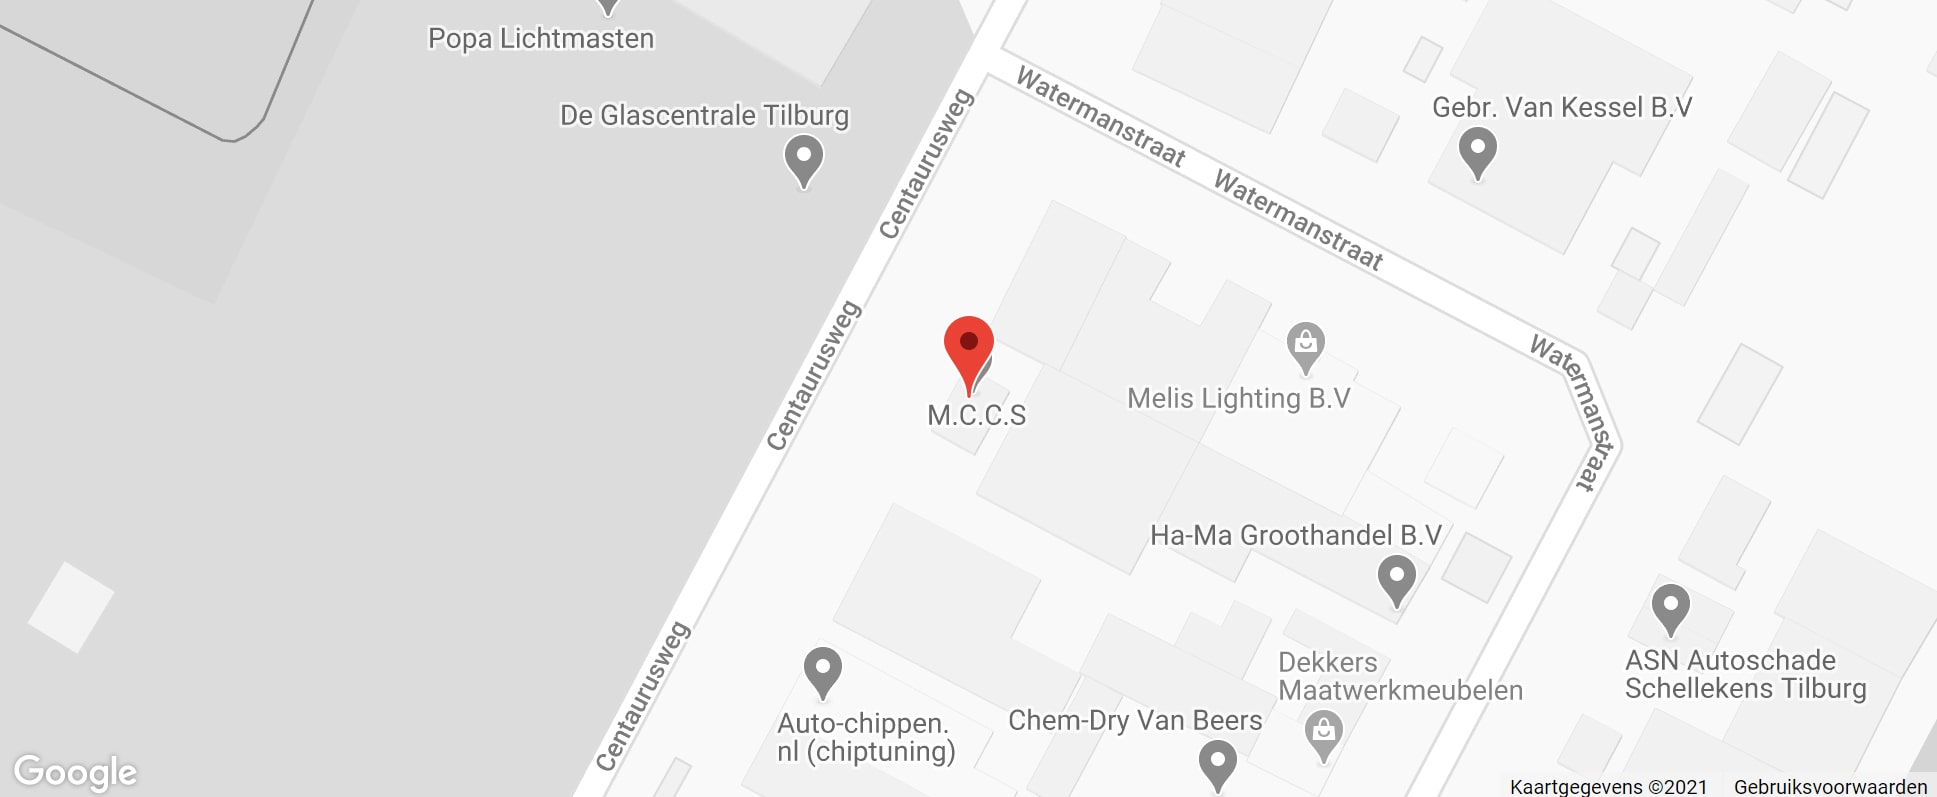 Google Maps MCCS BMW GARAGE TILBURG